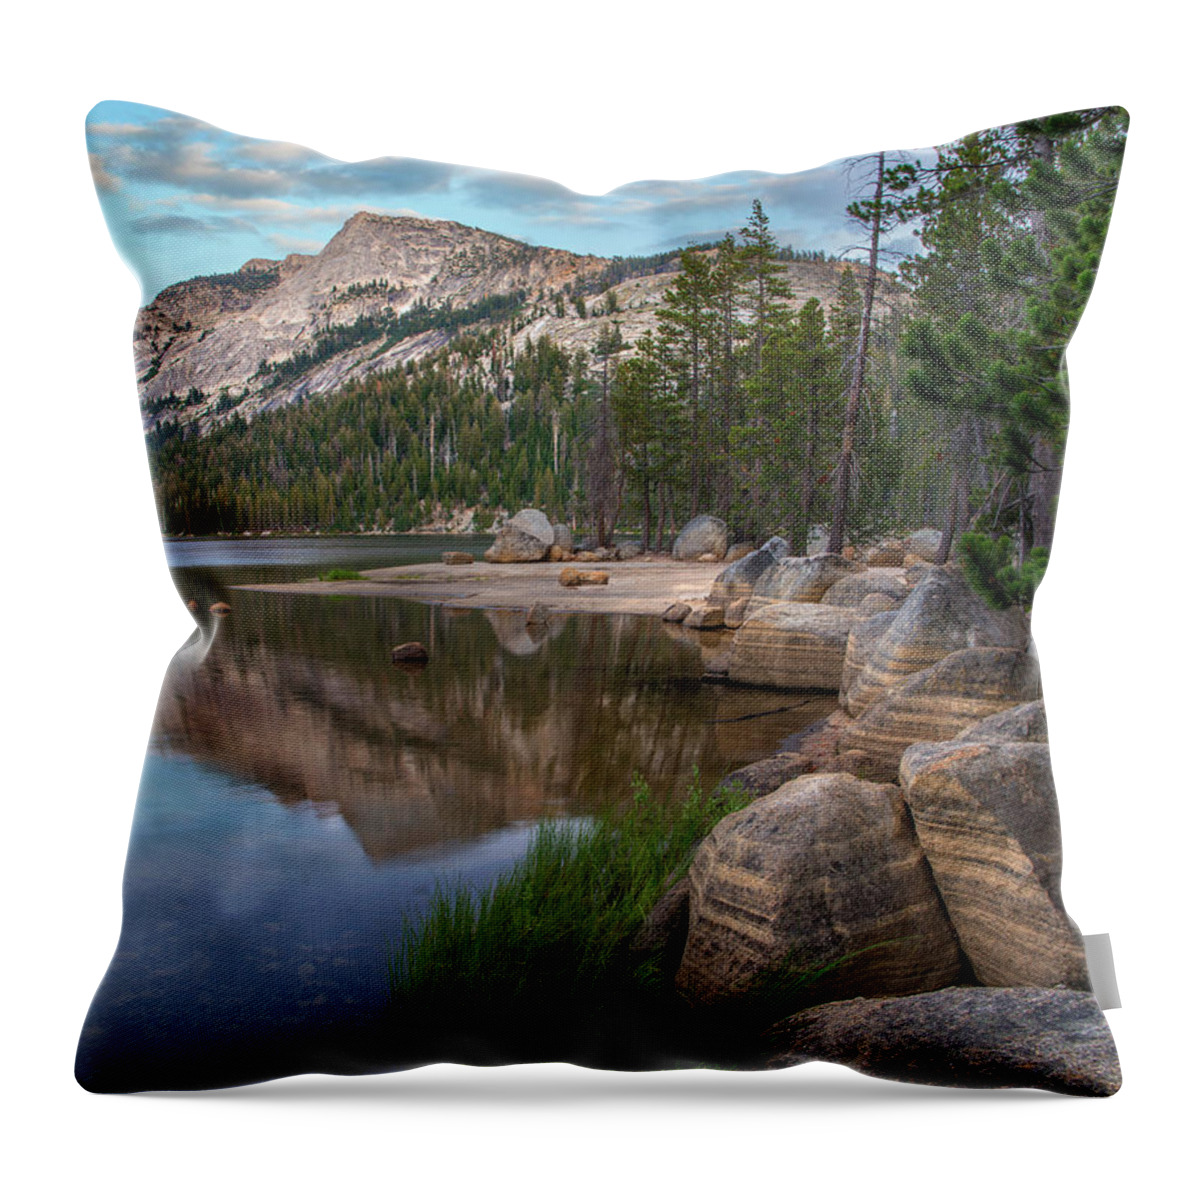 00574874 Throw Pillow featuring the photograph Lake Tenaya And Sierra Nevada, Yosemite by Tim Fitzharris